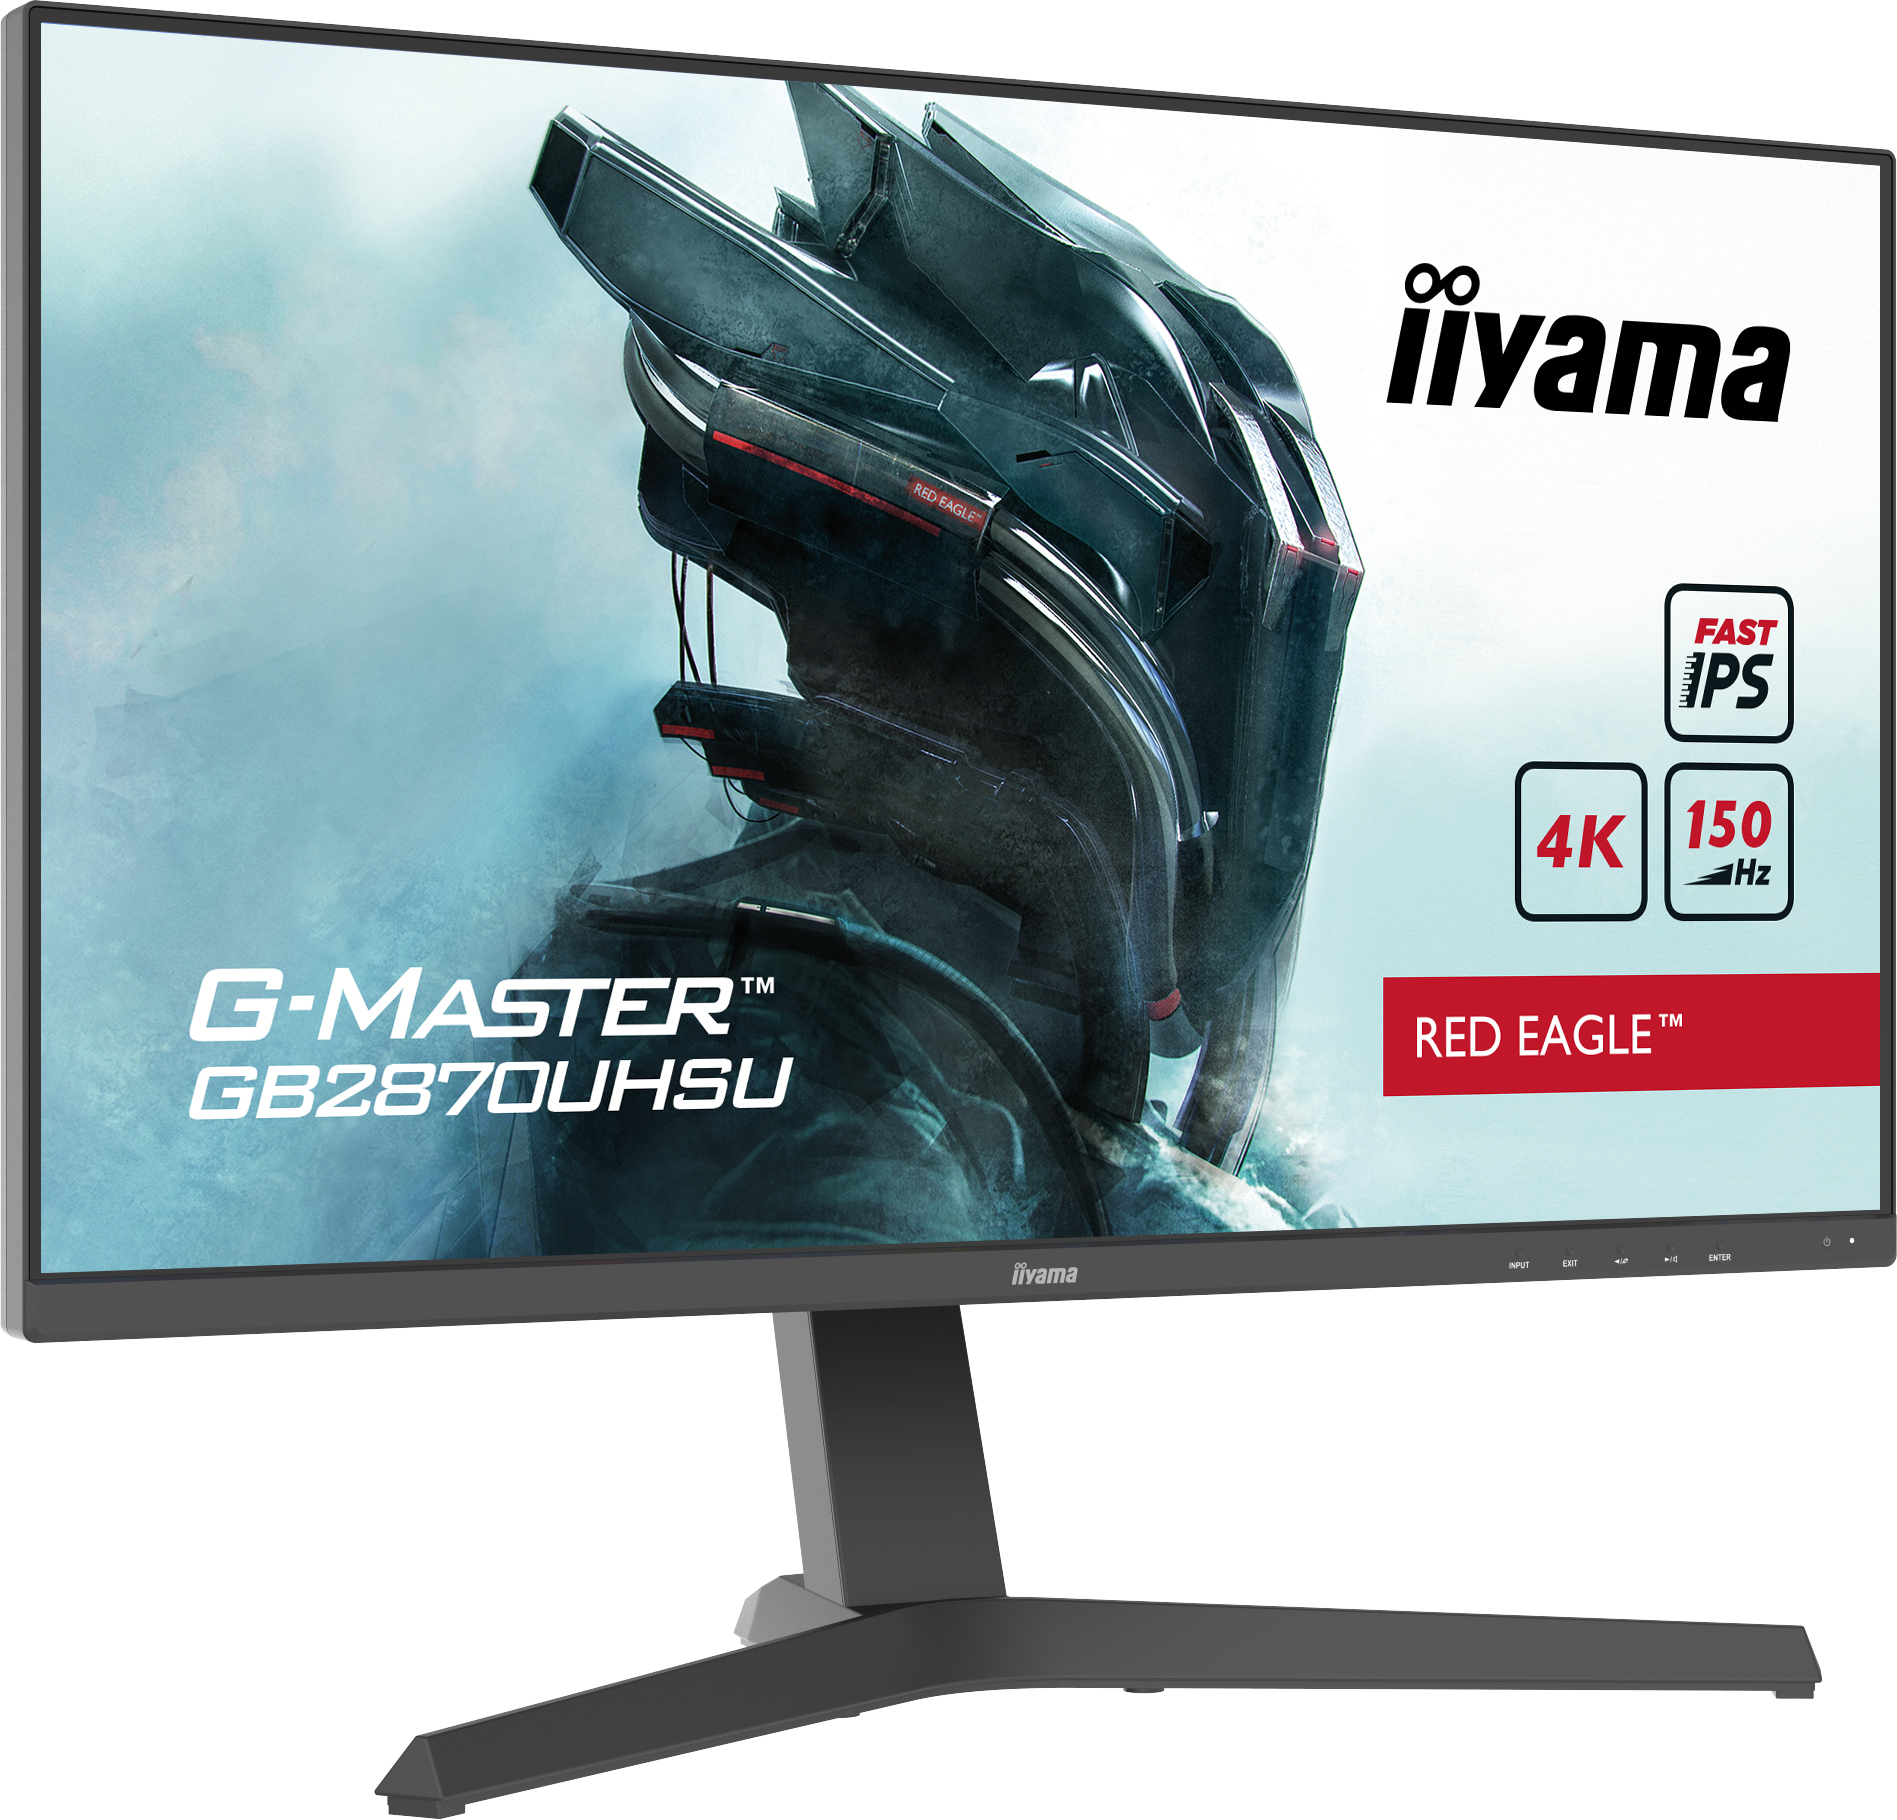 iiyama-g-master-gb2870uhsu-b1-computer-monitor-13401406-36674170